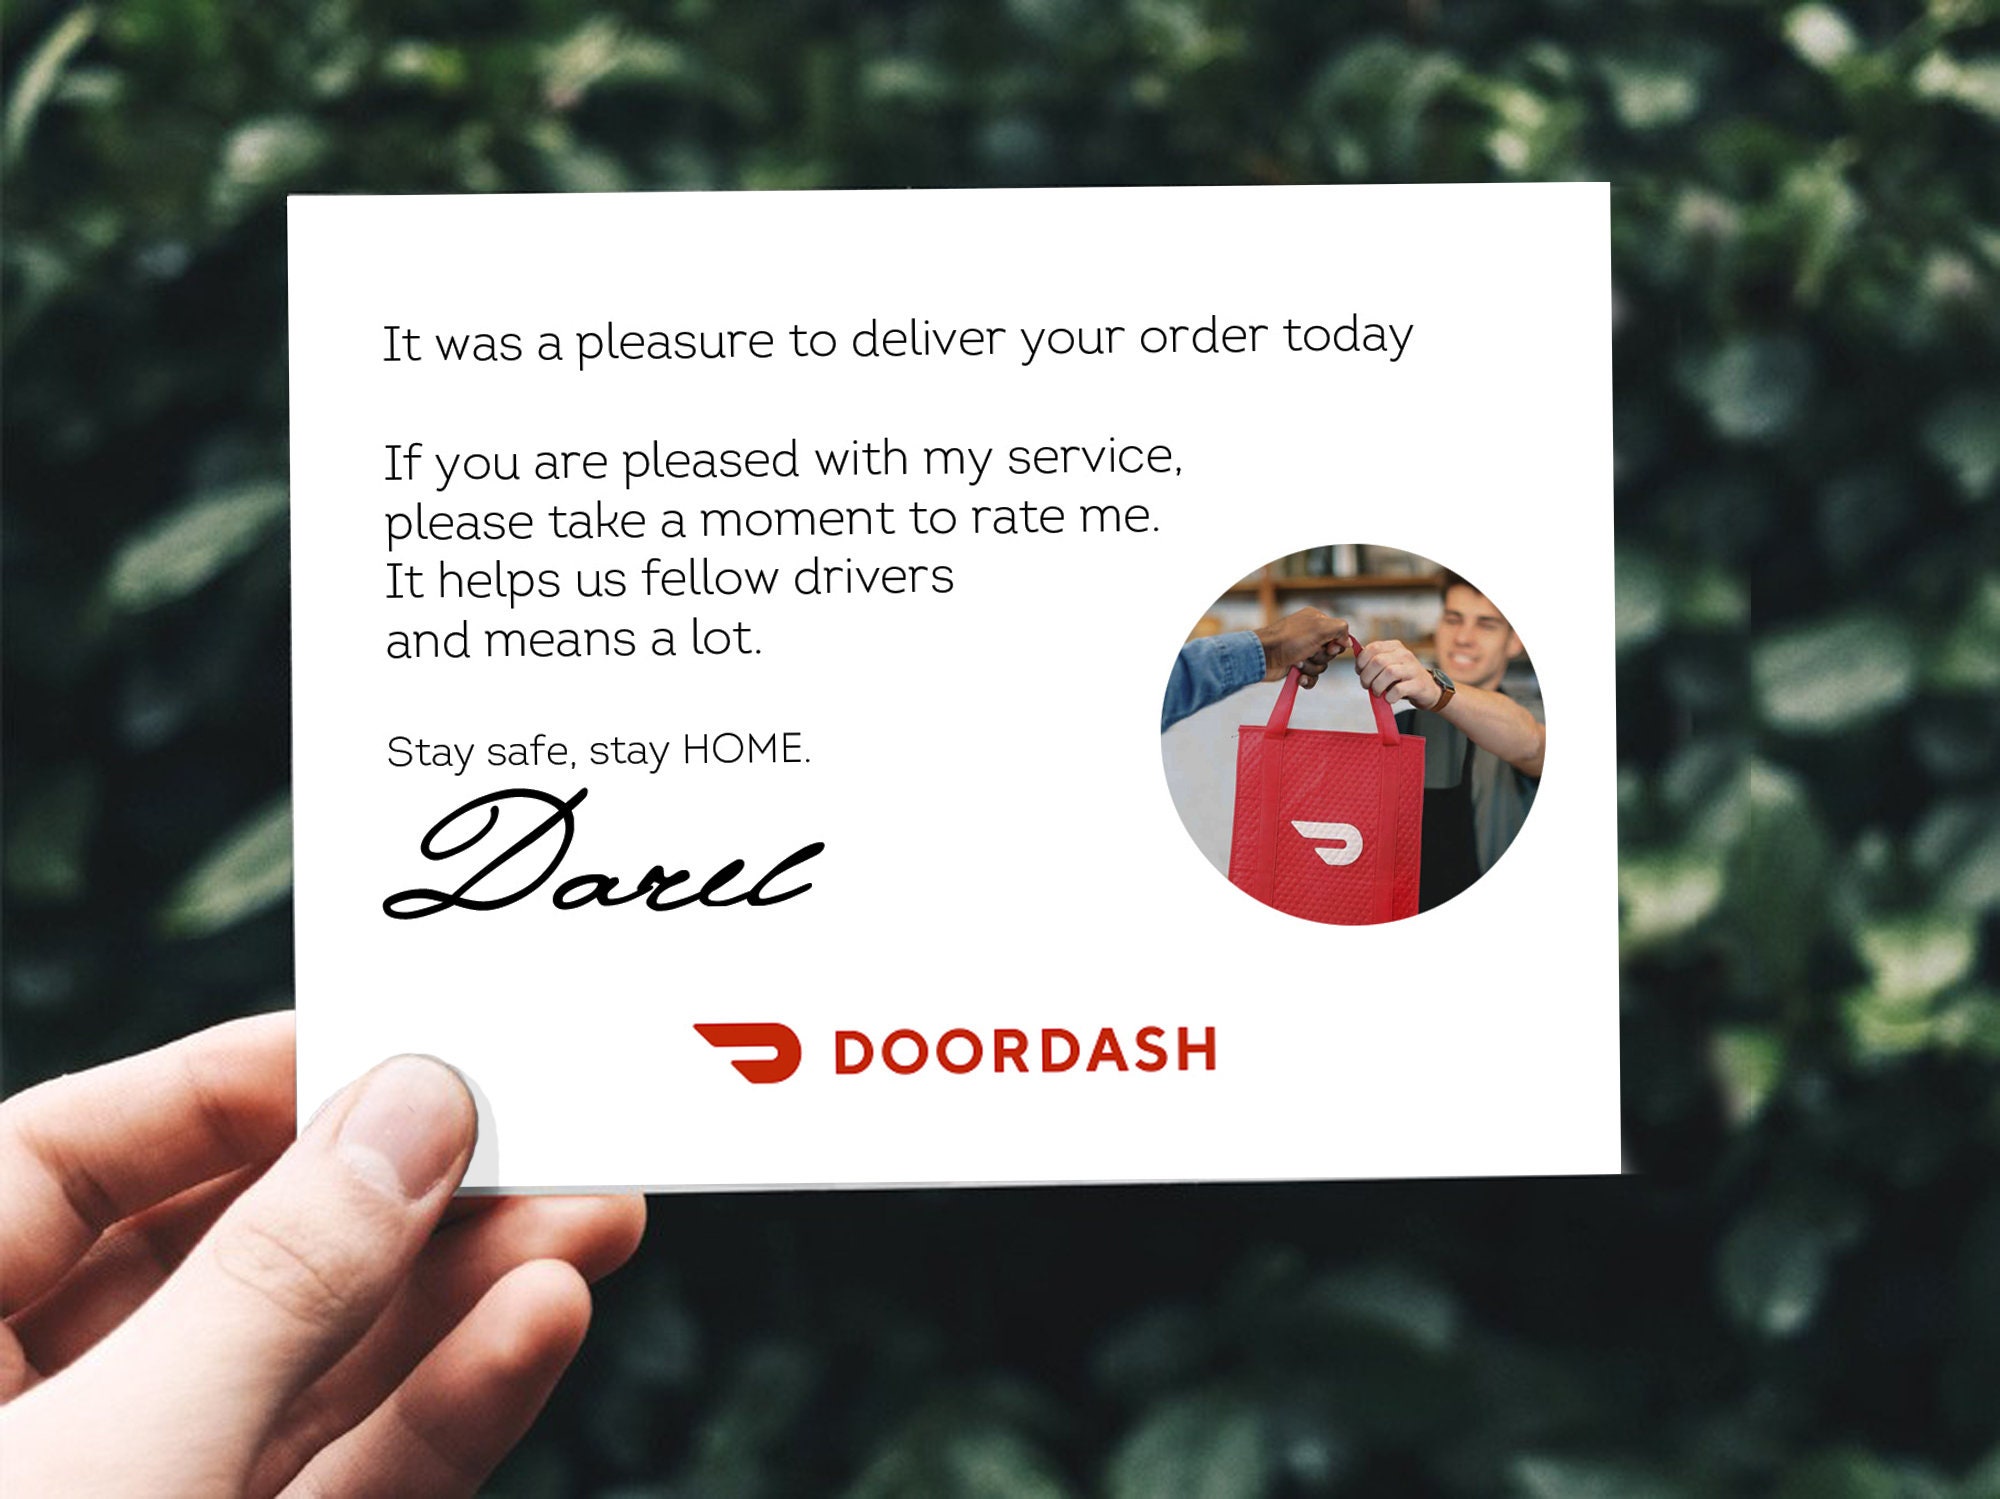 Personalized Doordash Thank You Digital Download (Instant Download) 